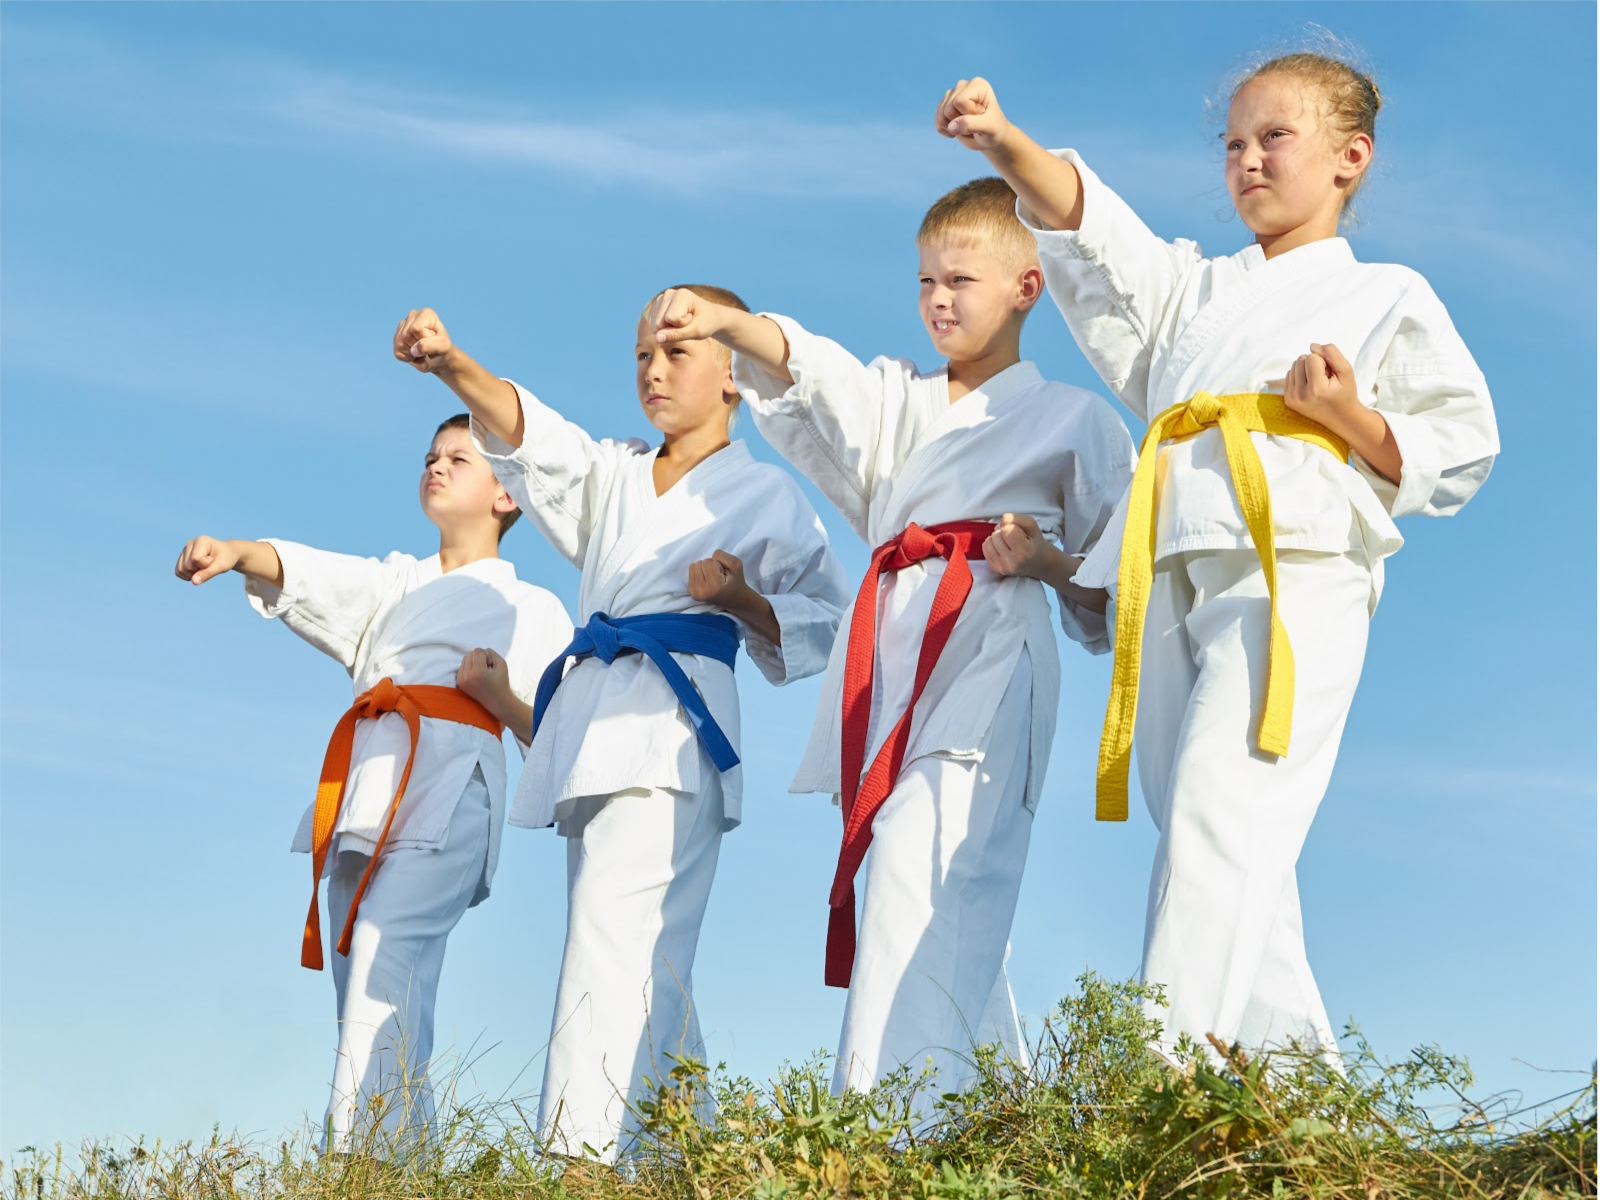 What Are Some Benefits of Jiu-Jitsu for Kids?